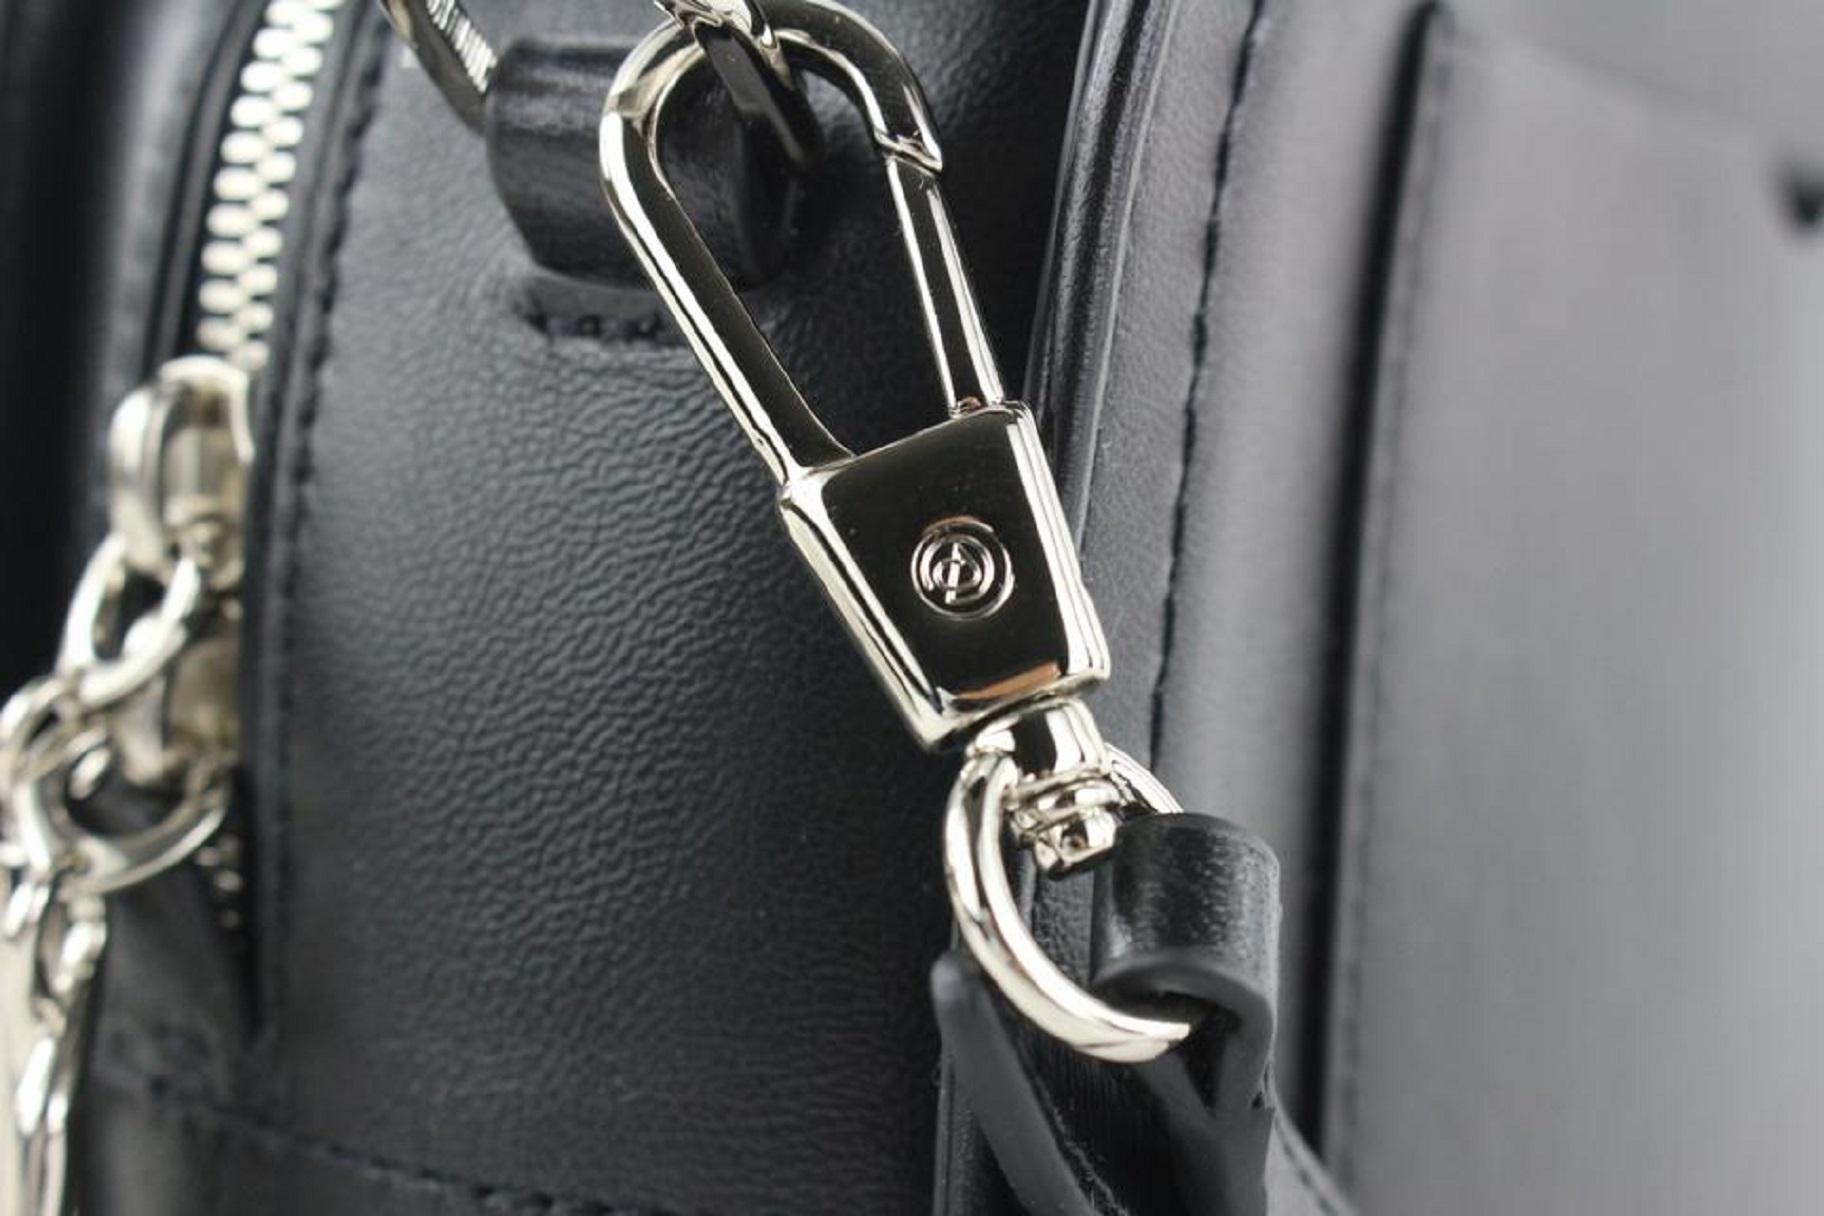 3.1 Phillip Lim Black Leather Crossbody Bag 483pl46 6